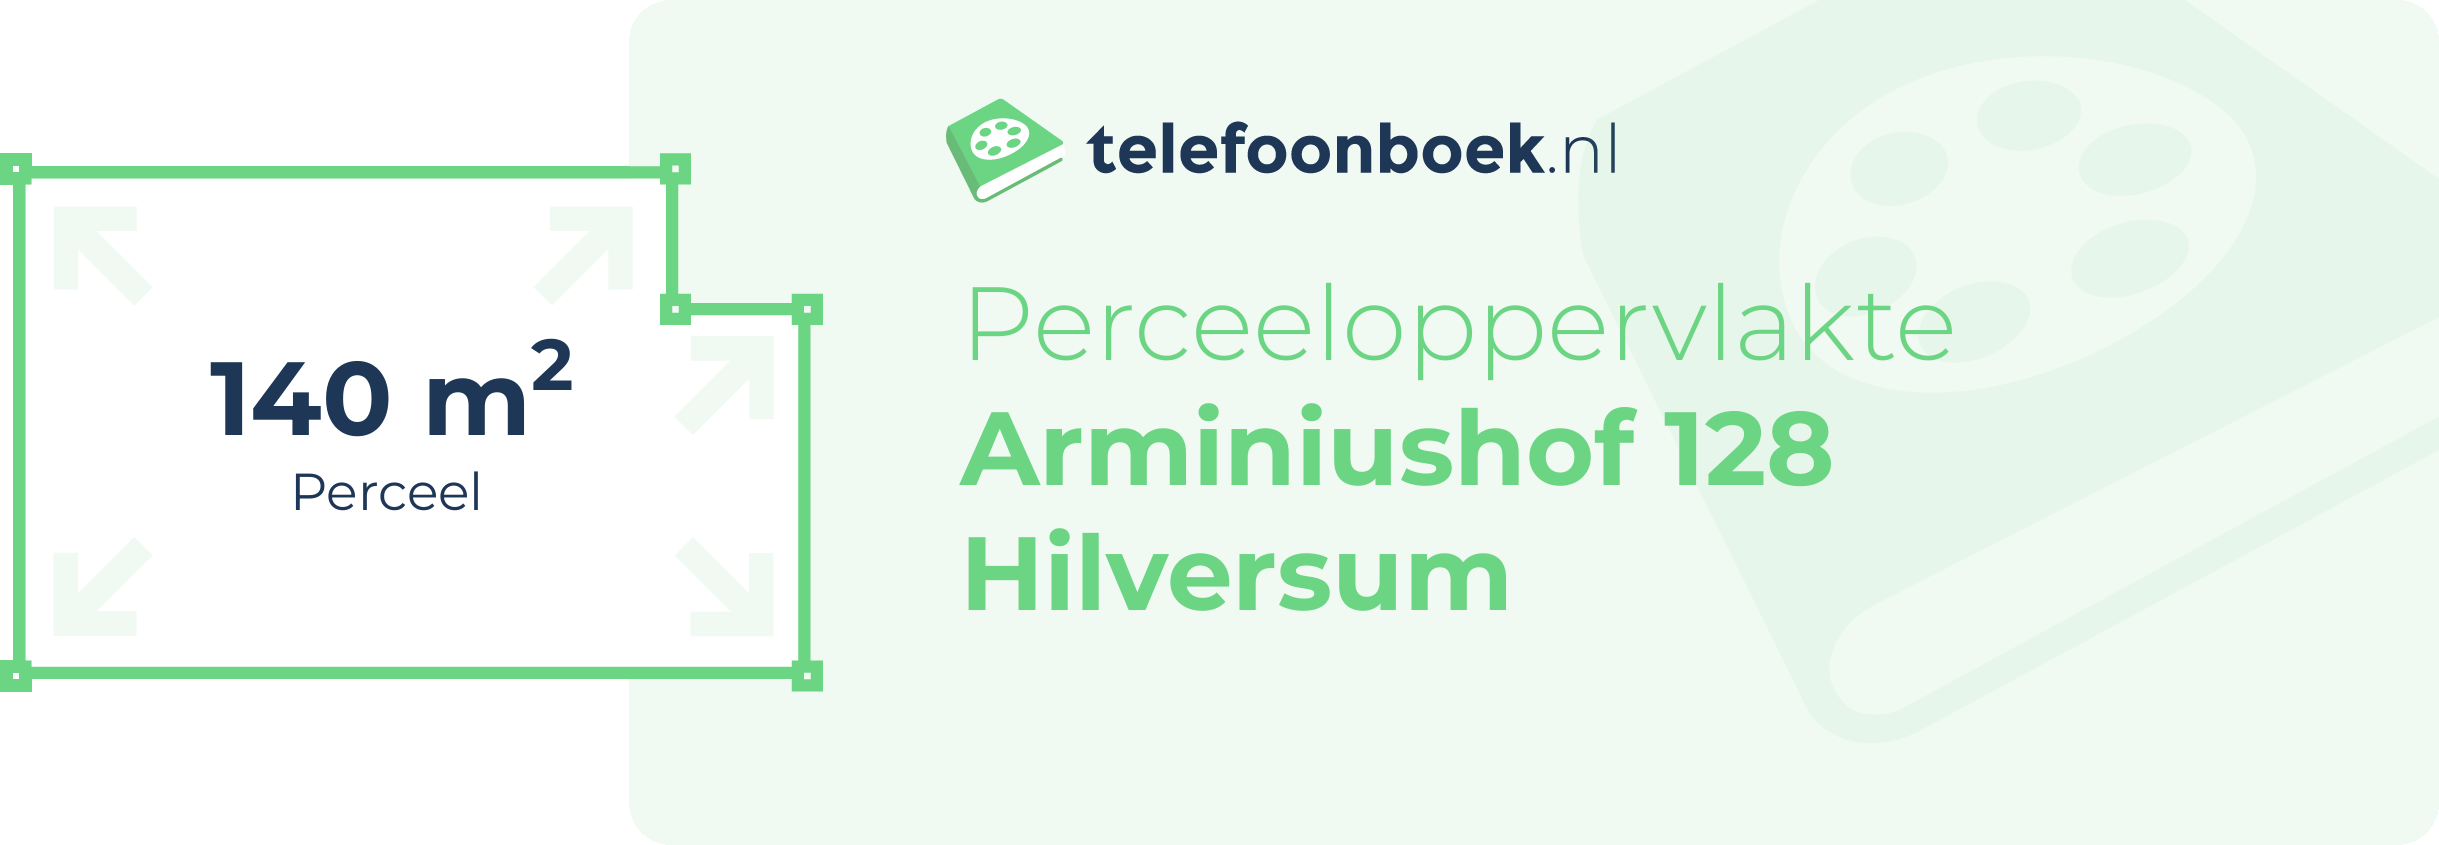 Perceeloppervlakte Arminiushof 128 Hilversum